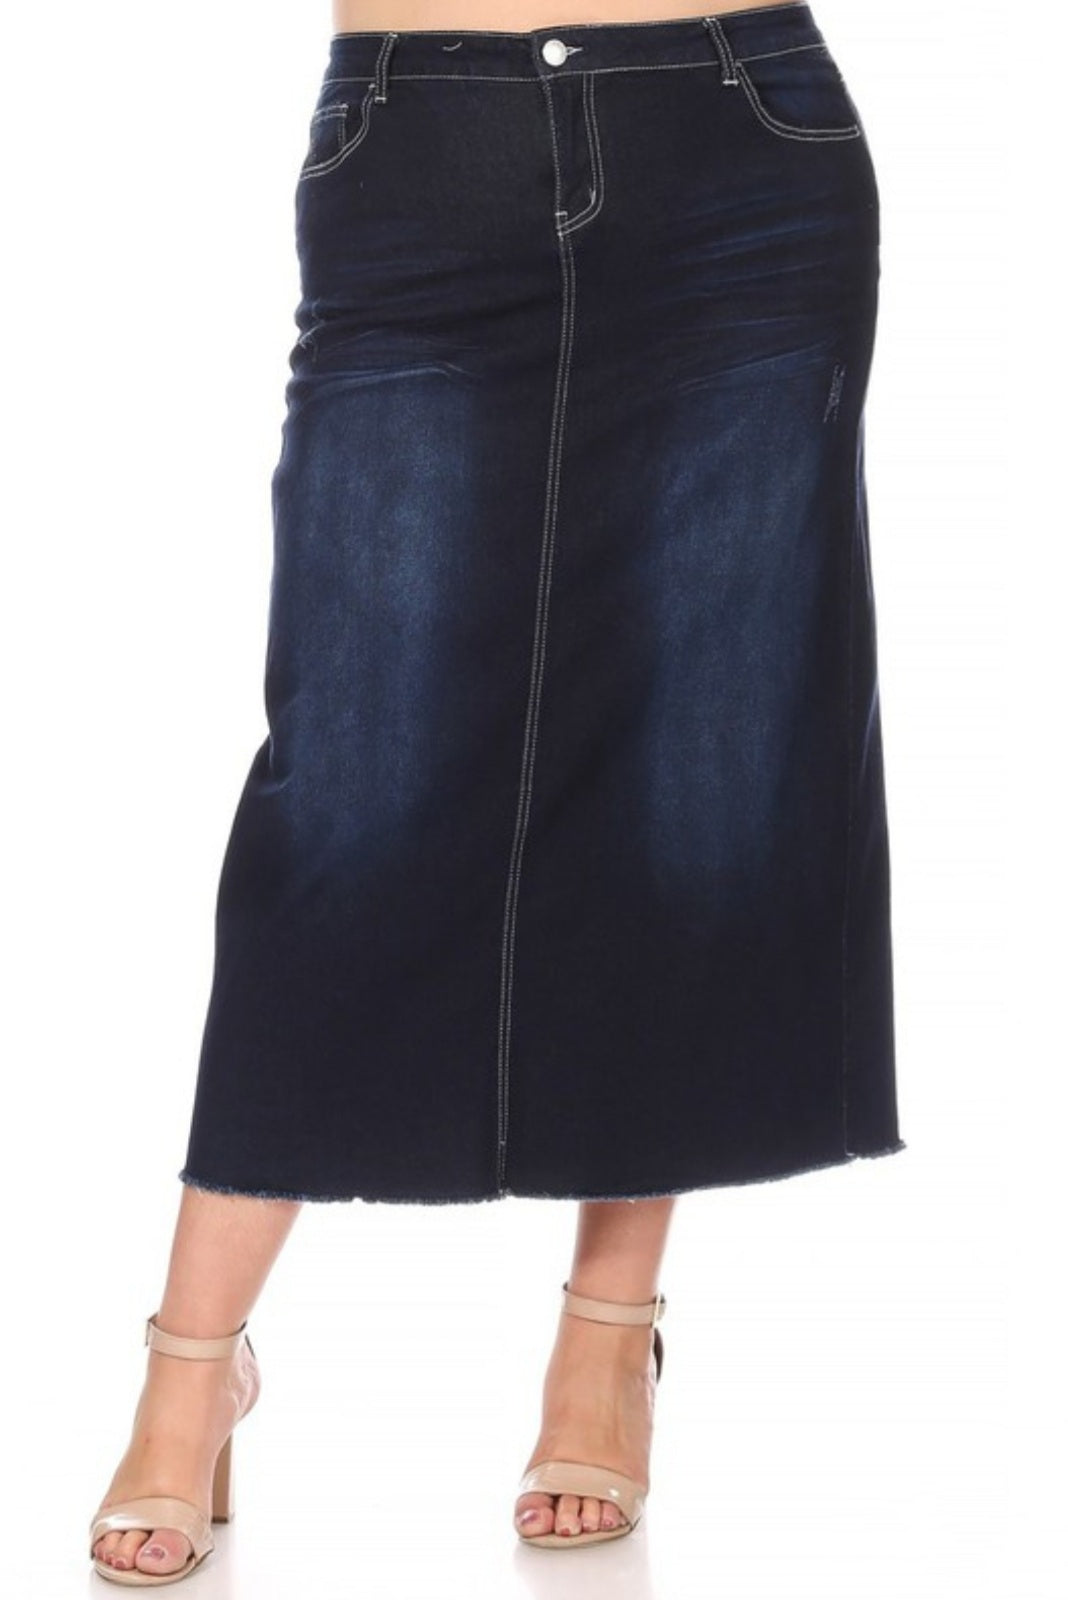 Ladies Long Dark Blue Denim Skirt